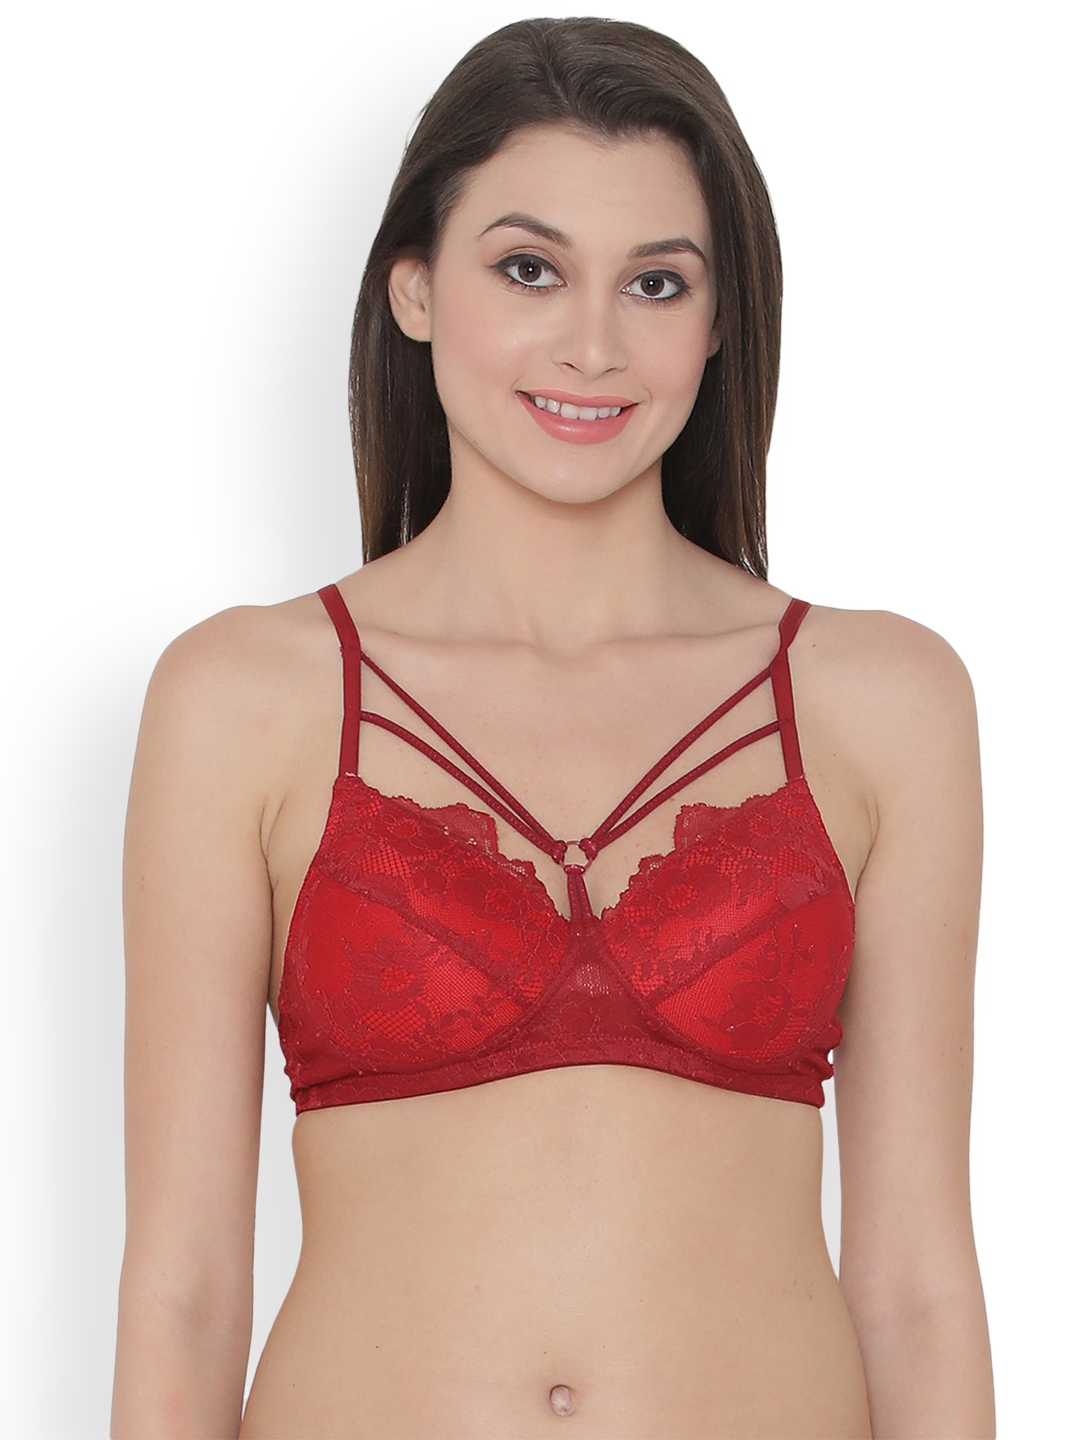 Buy online Red Front Open Bra from lingerie for Women by Clovia